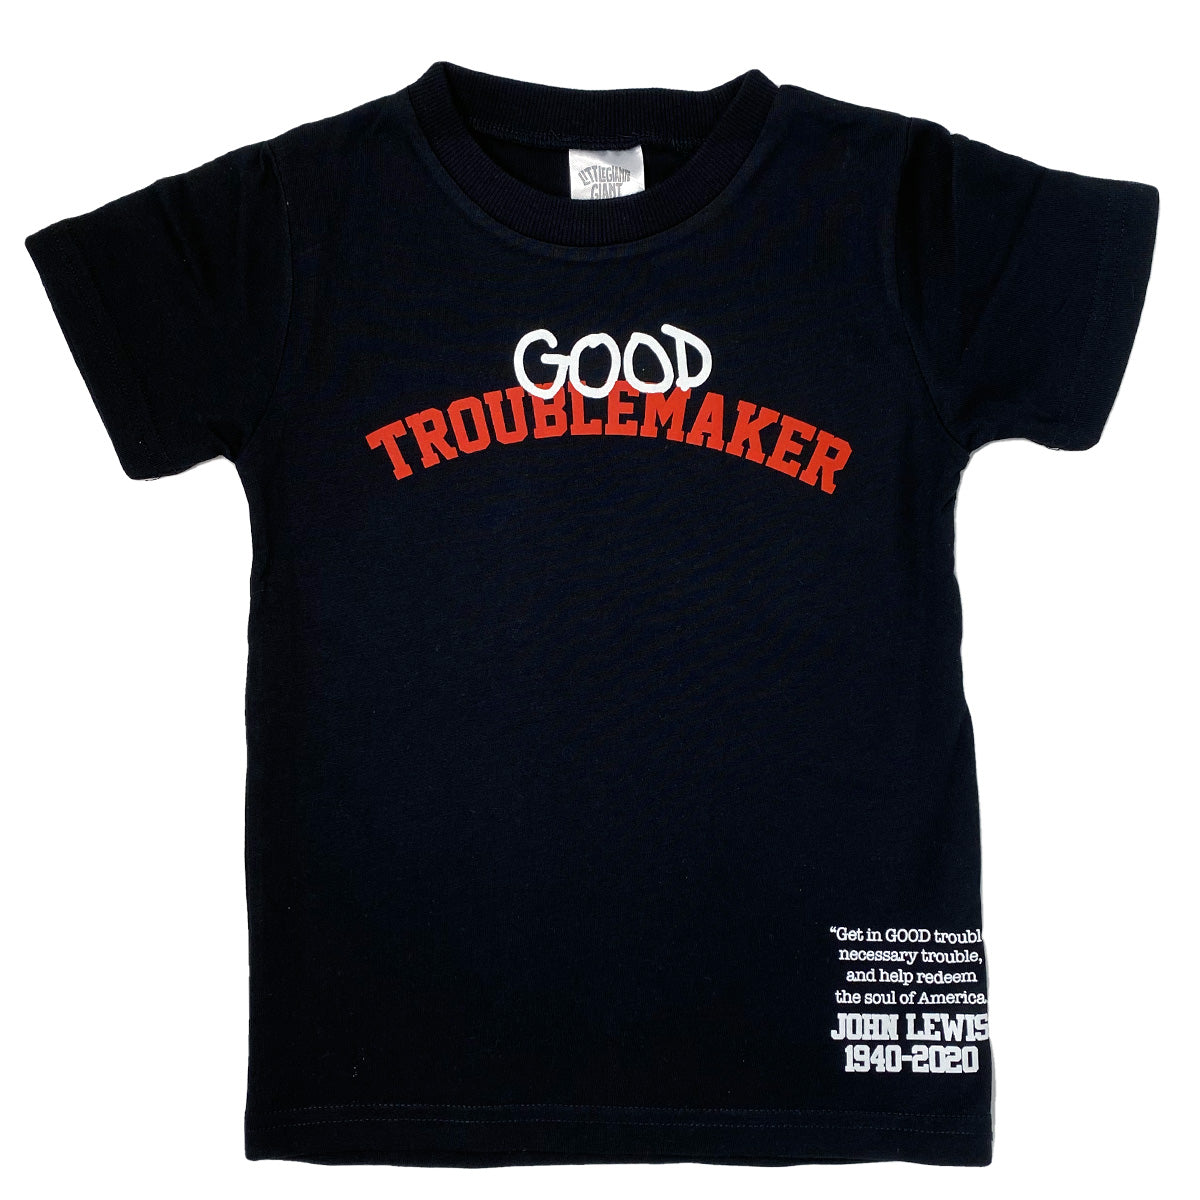 Troublemaker T-shirt (Black)